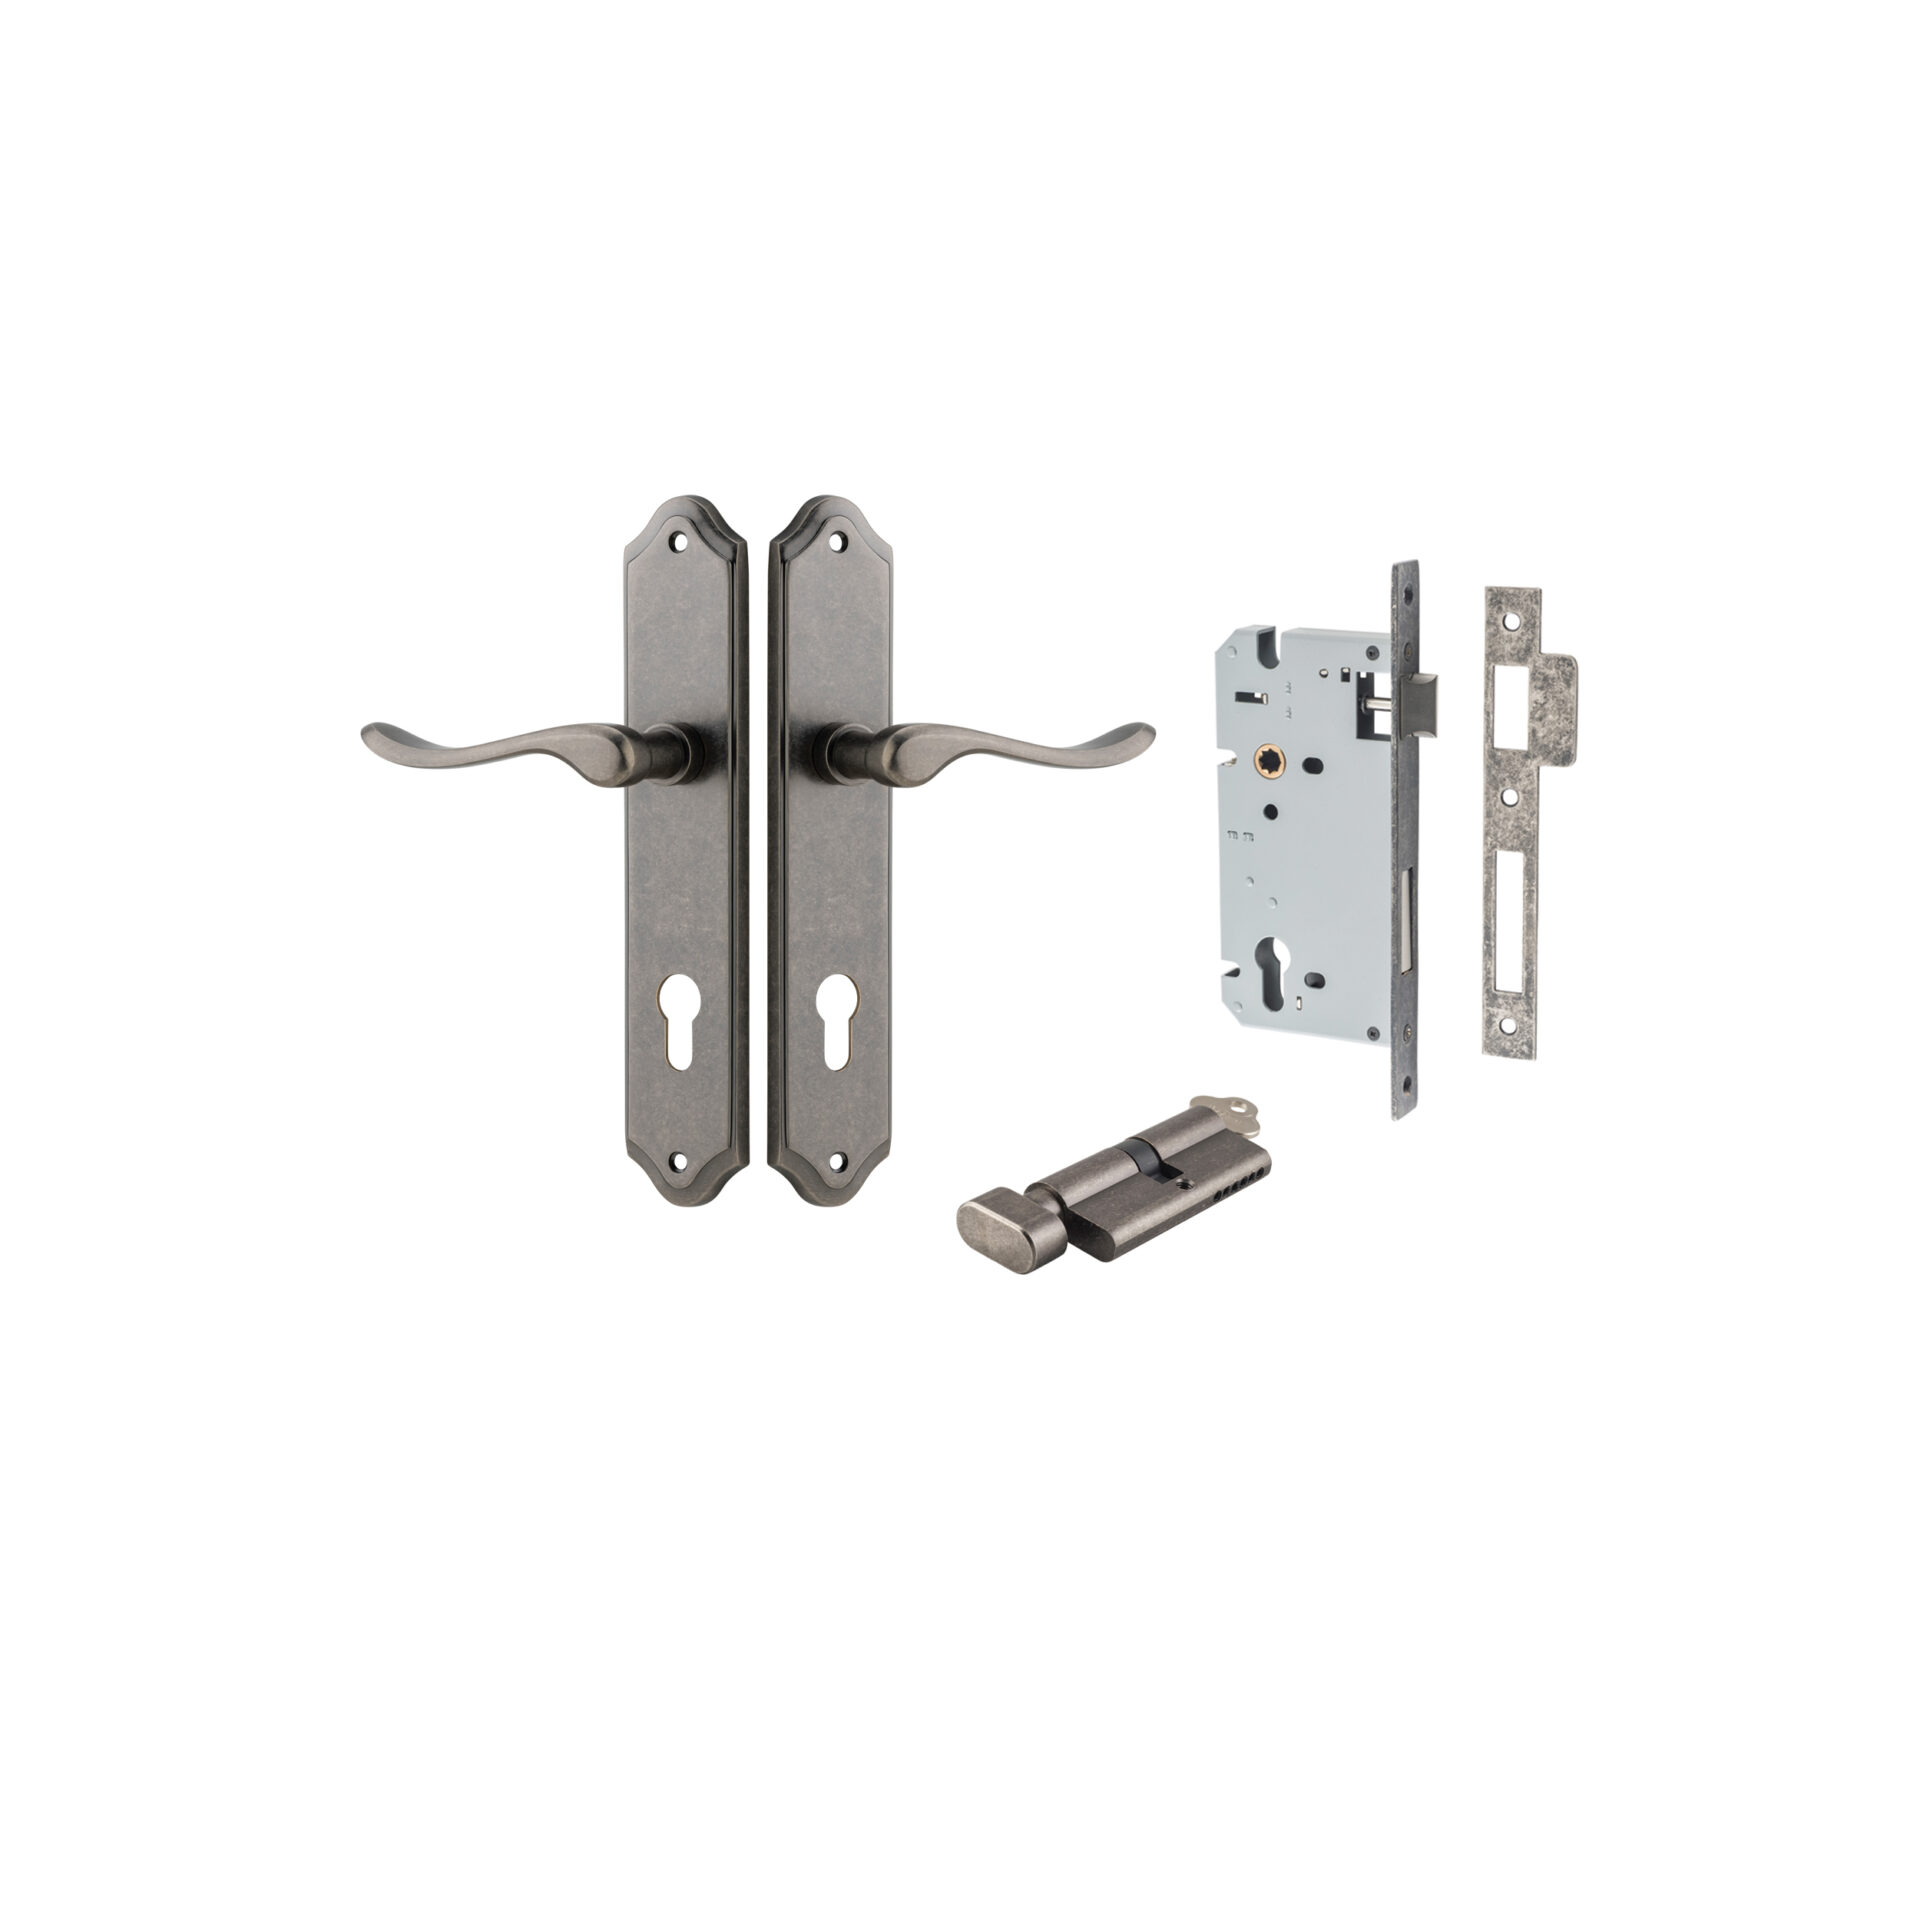 Stirling Lever - Shouldered Backplate Entrance Kit with High Security Lock